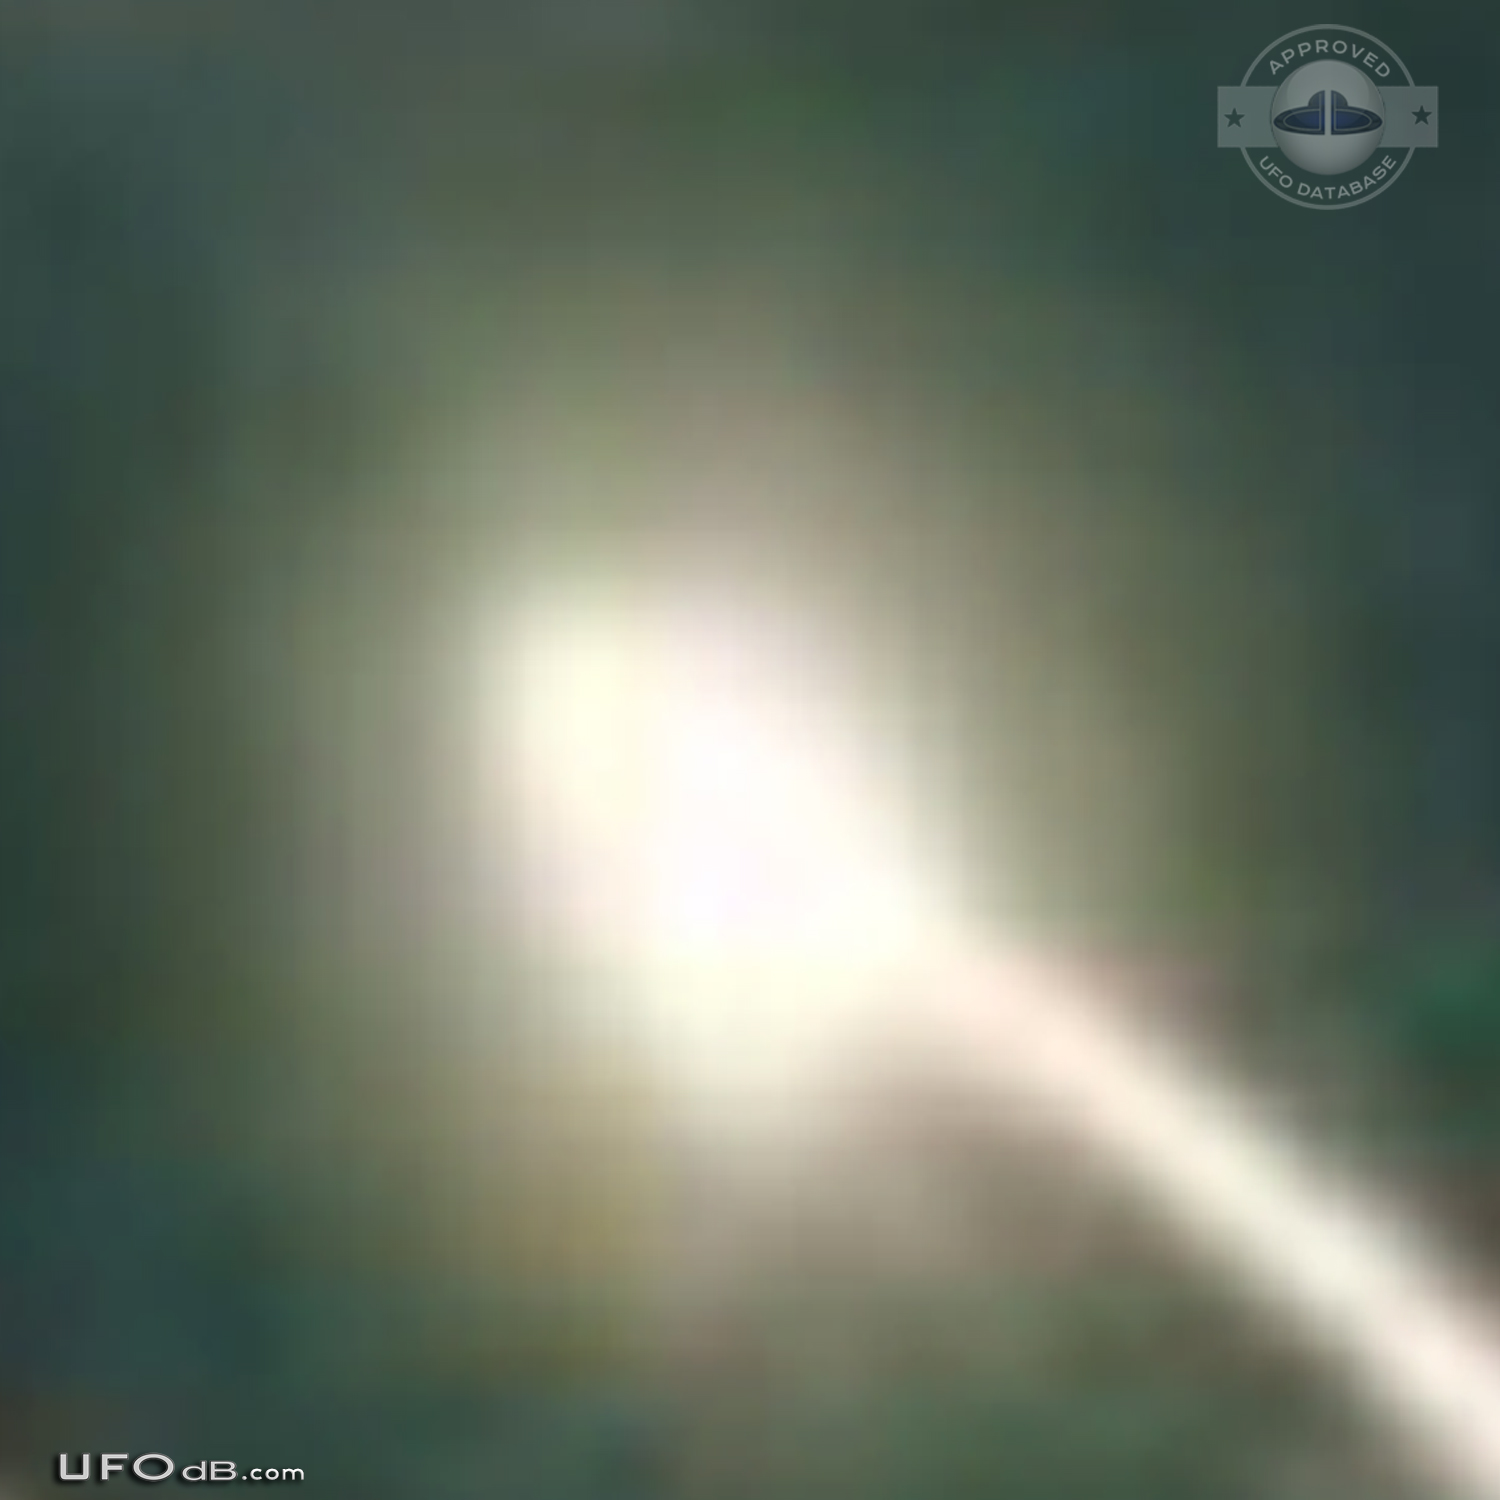 20 seconds Picture capture UFO over Popocatepetl Volcano | Mexico 2000 UFO Picture #253-7